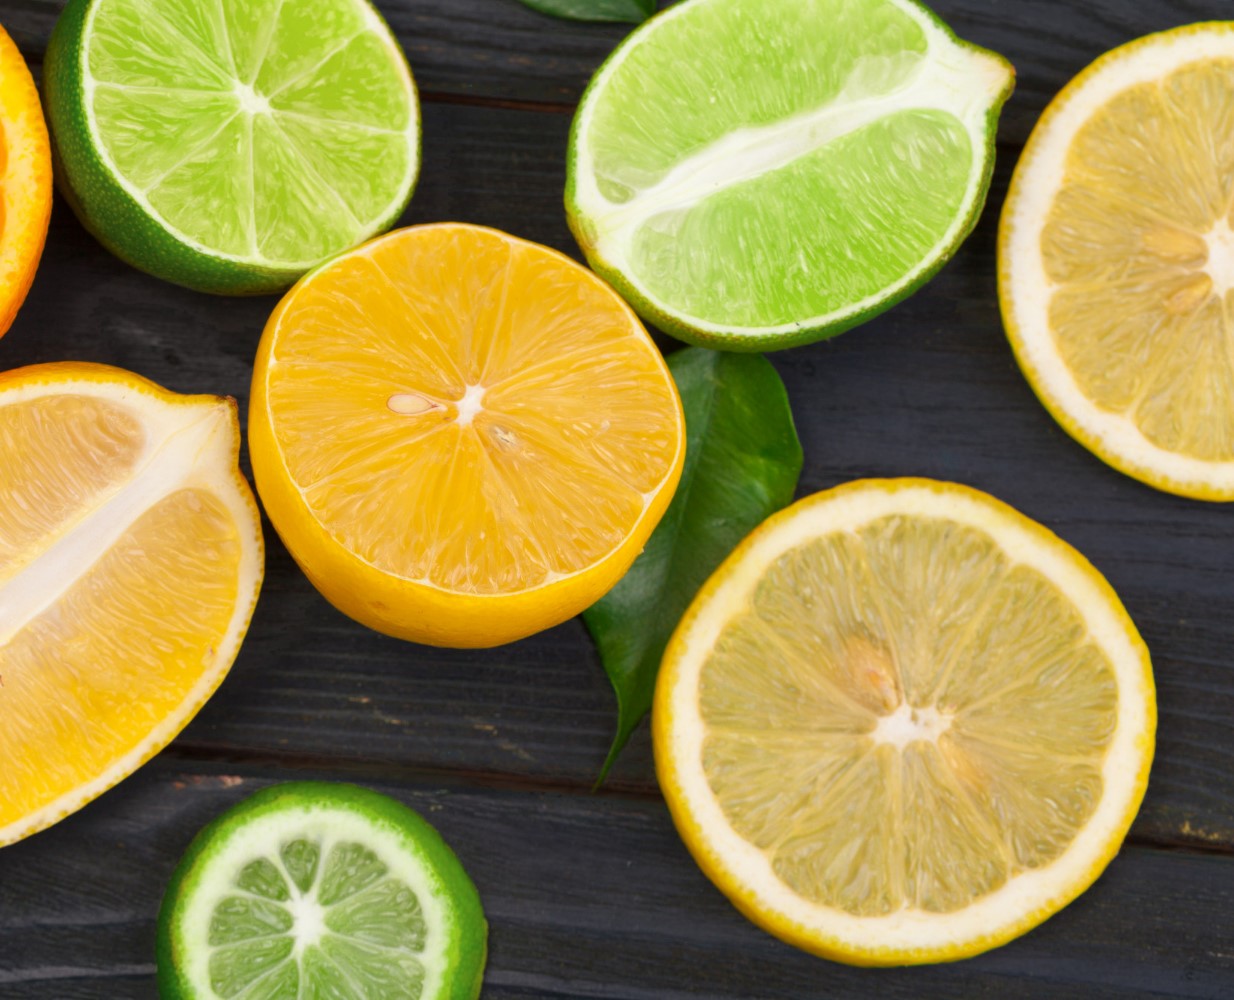 Limonki i cytryny